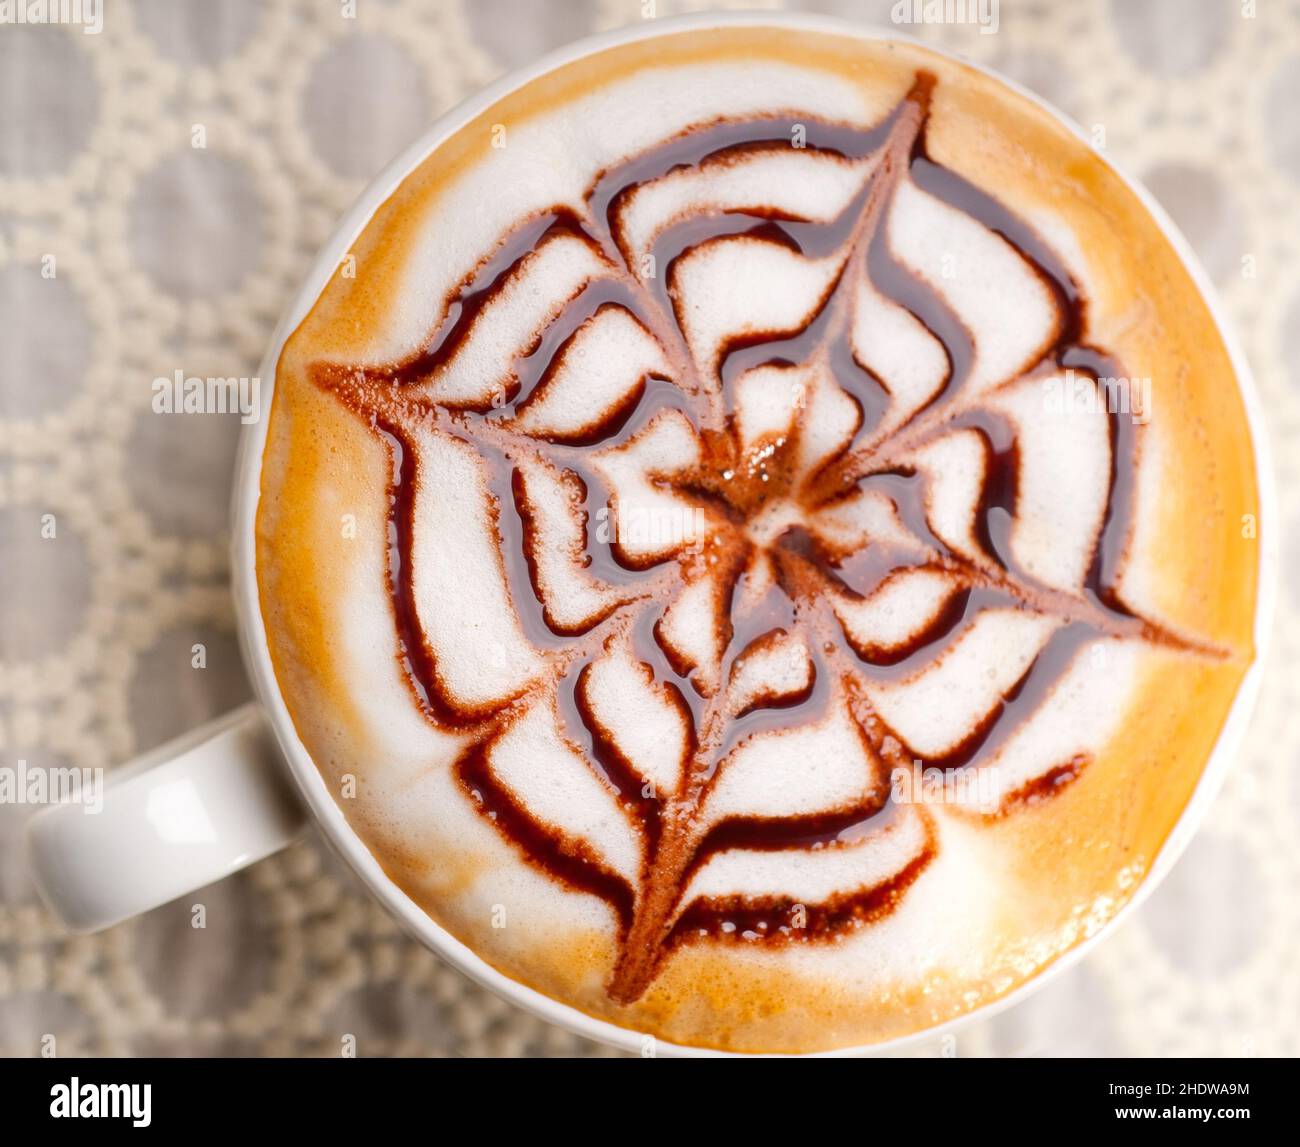 milk foam, cappuccino, latte art, milk foams, cappuccinos, cappucino, coffee Stock Photo